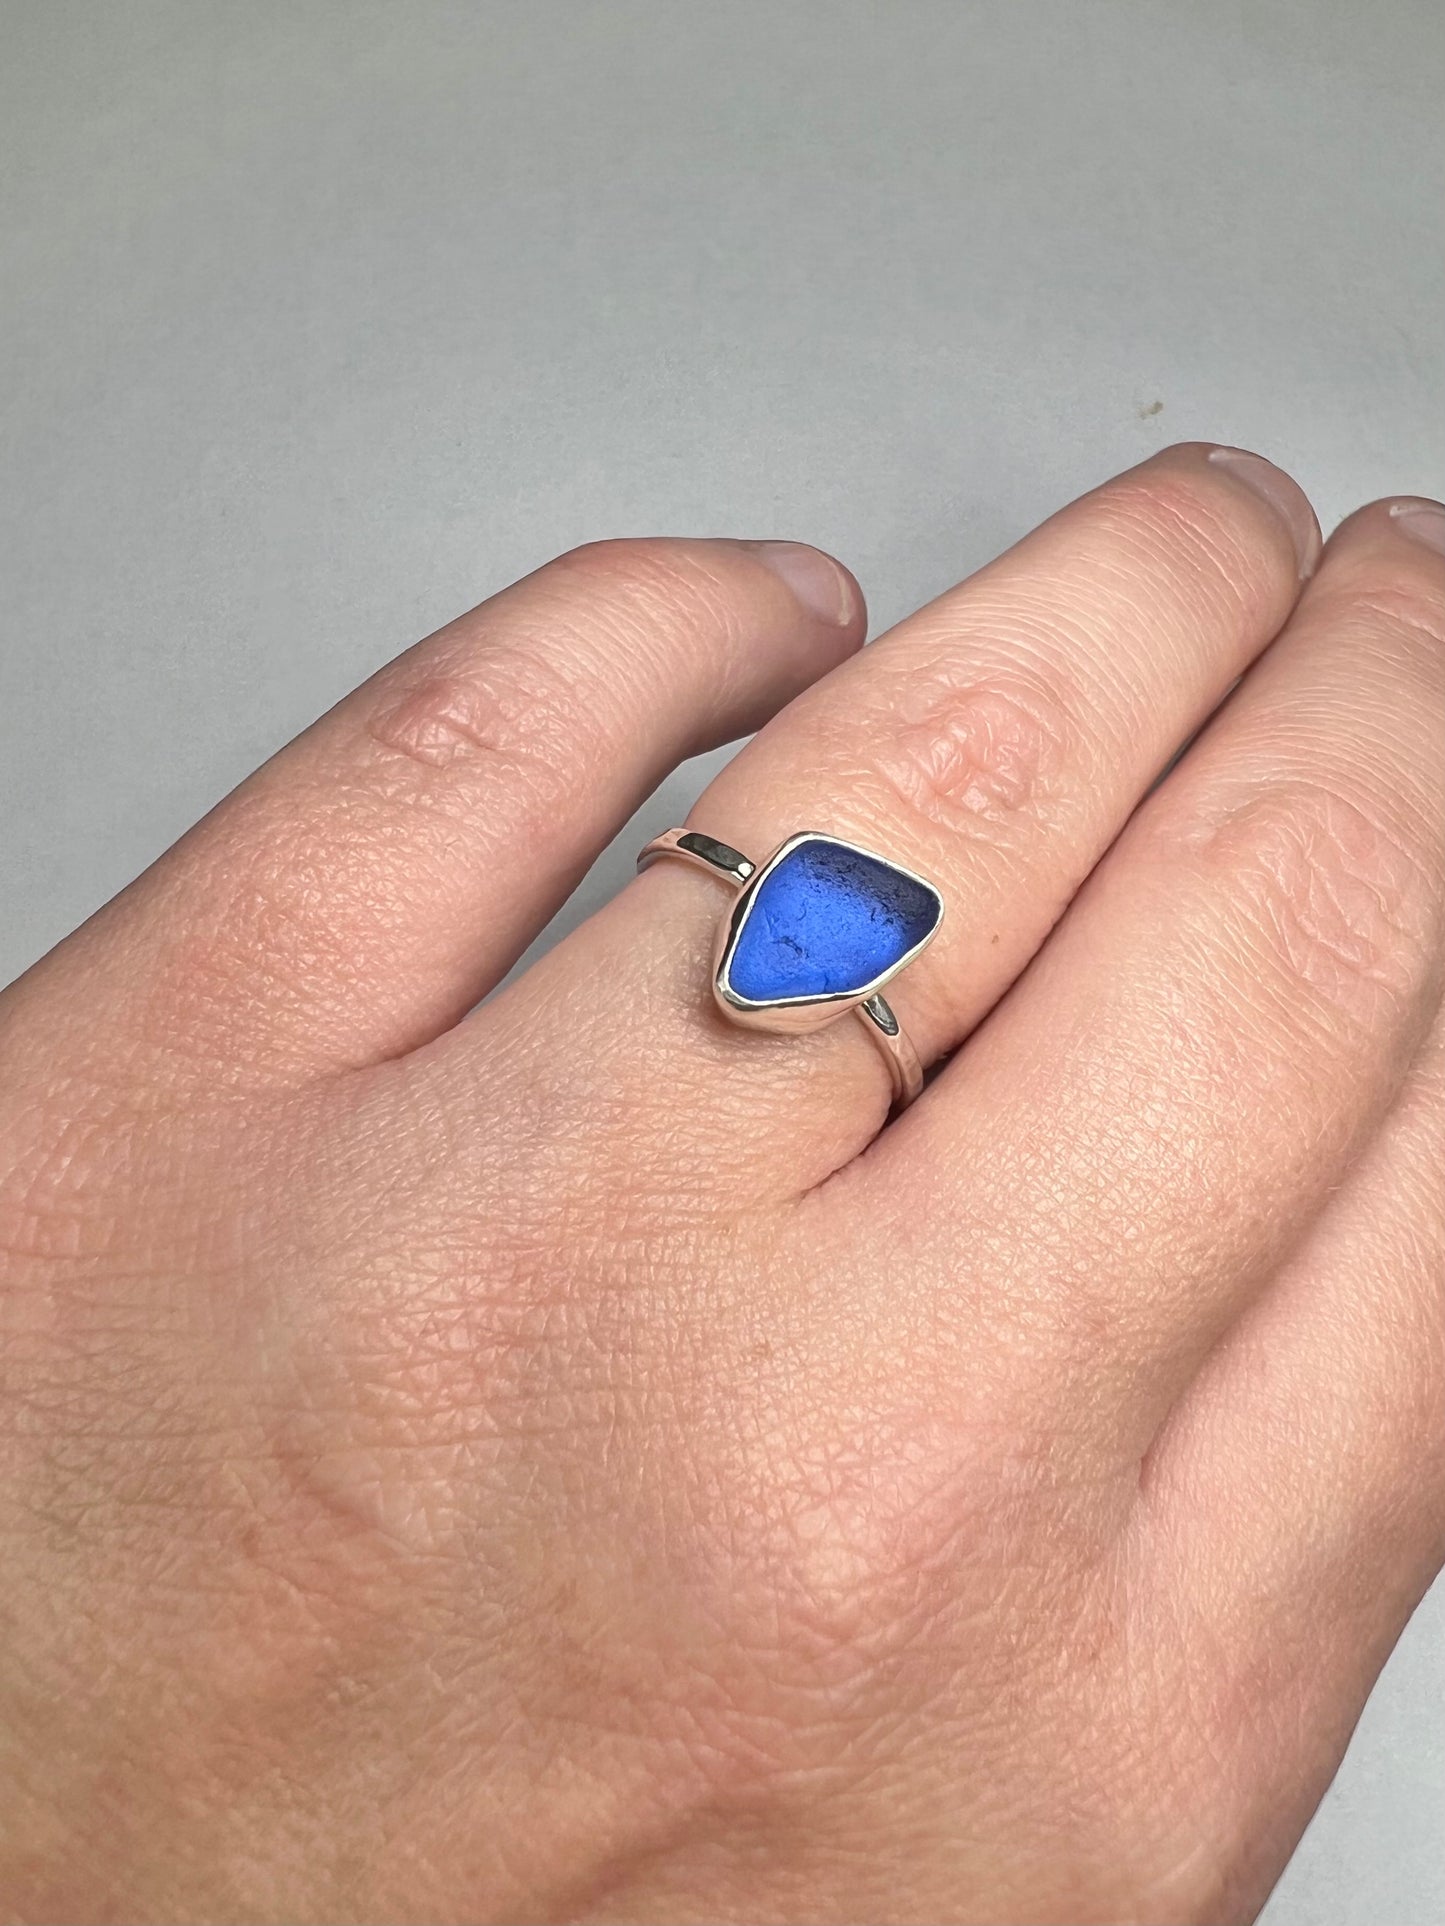 Cornish cobalt blue seaglass ring Size M